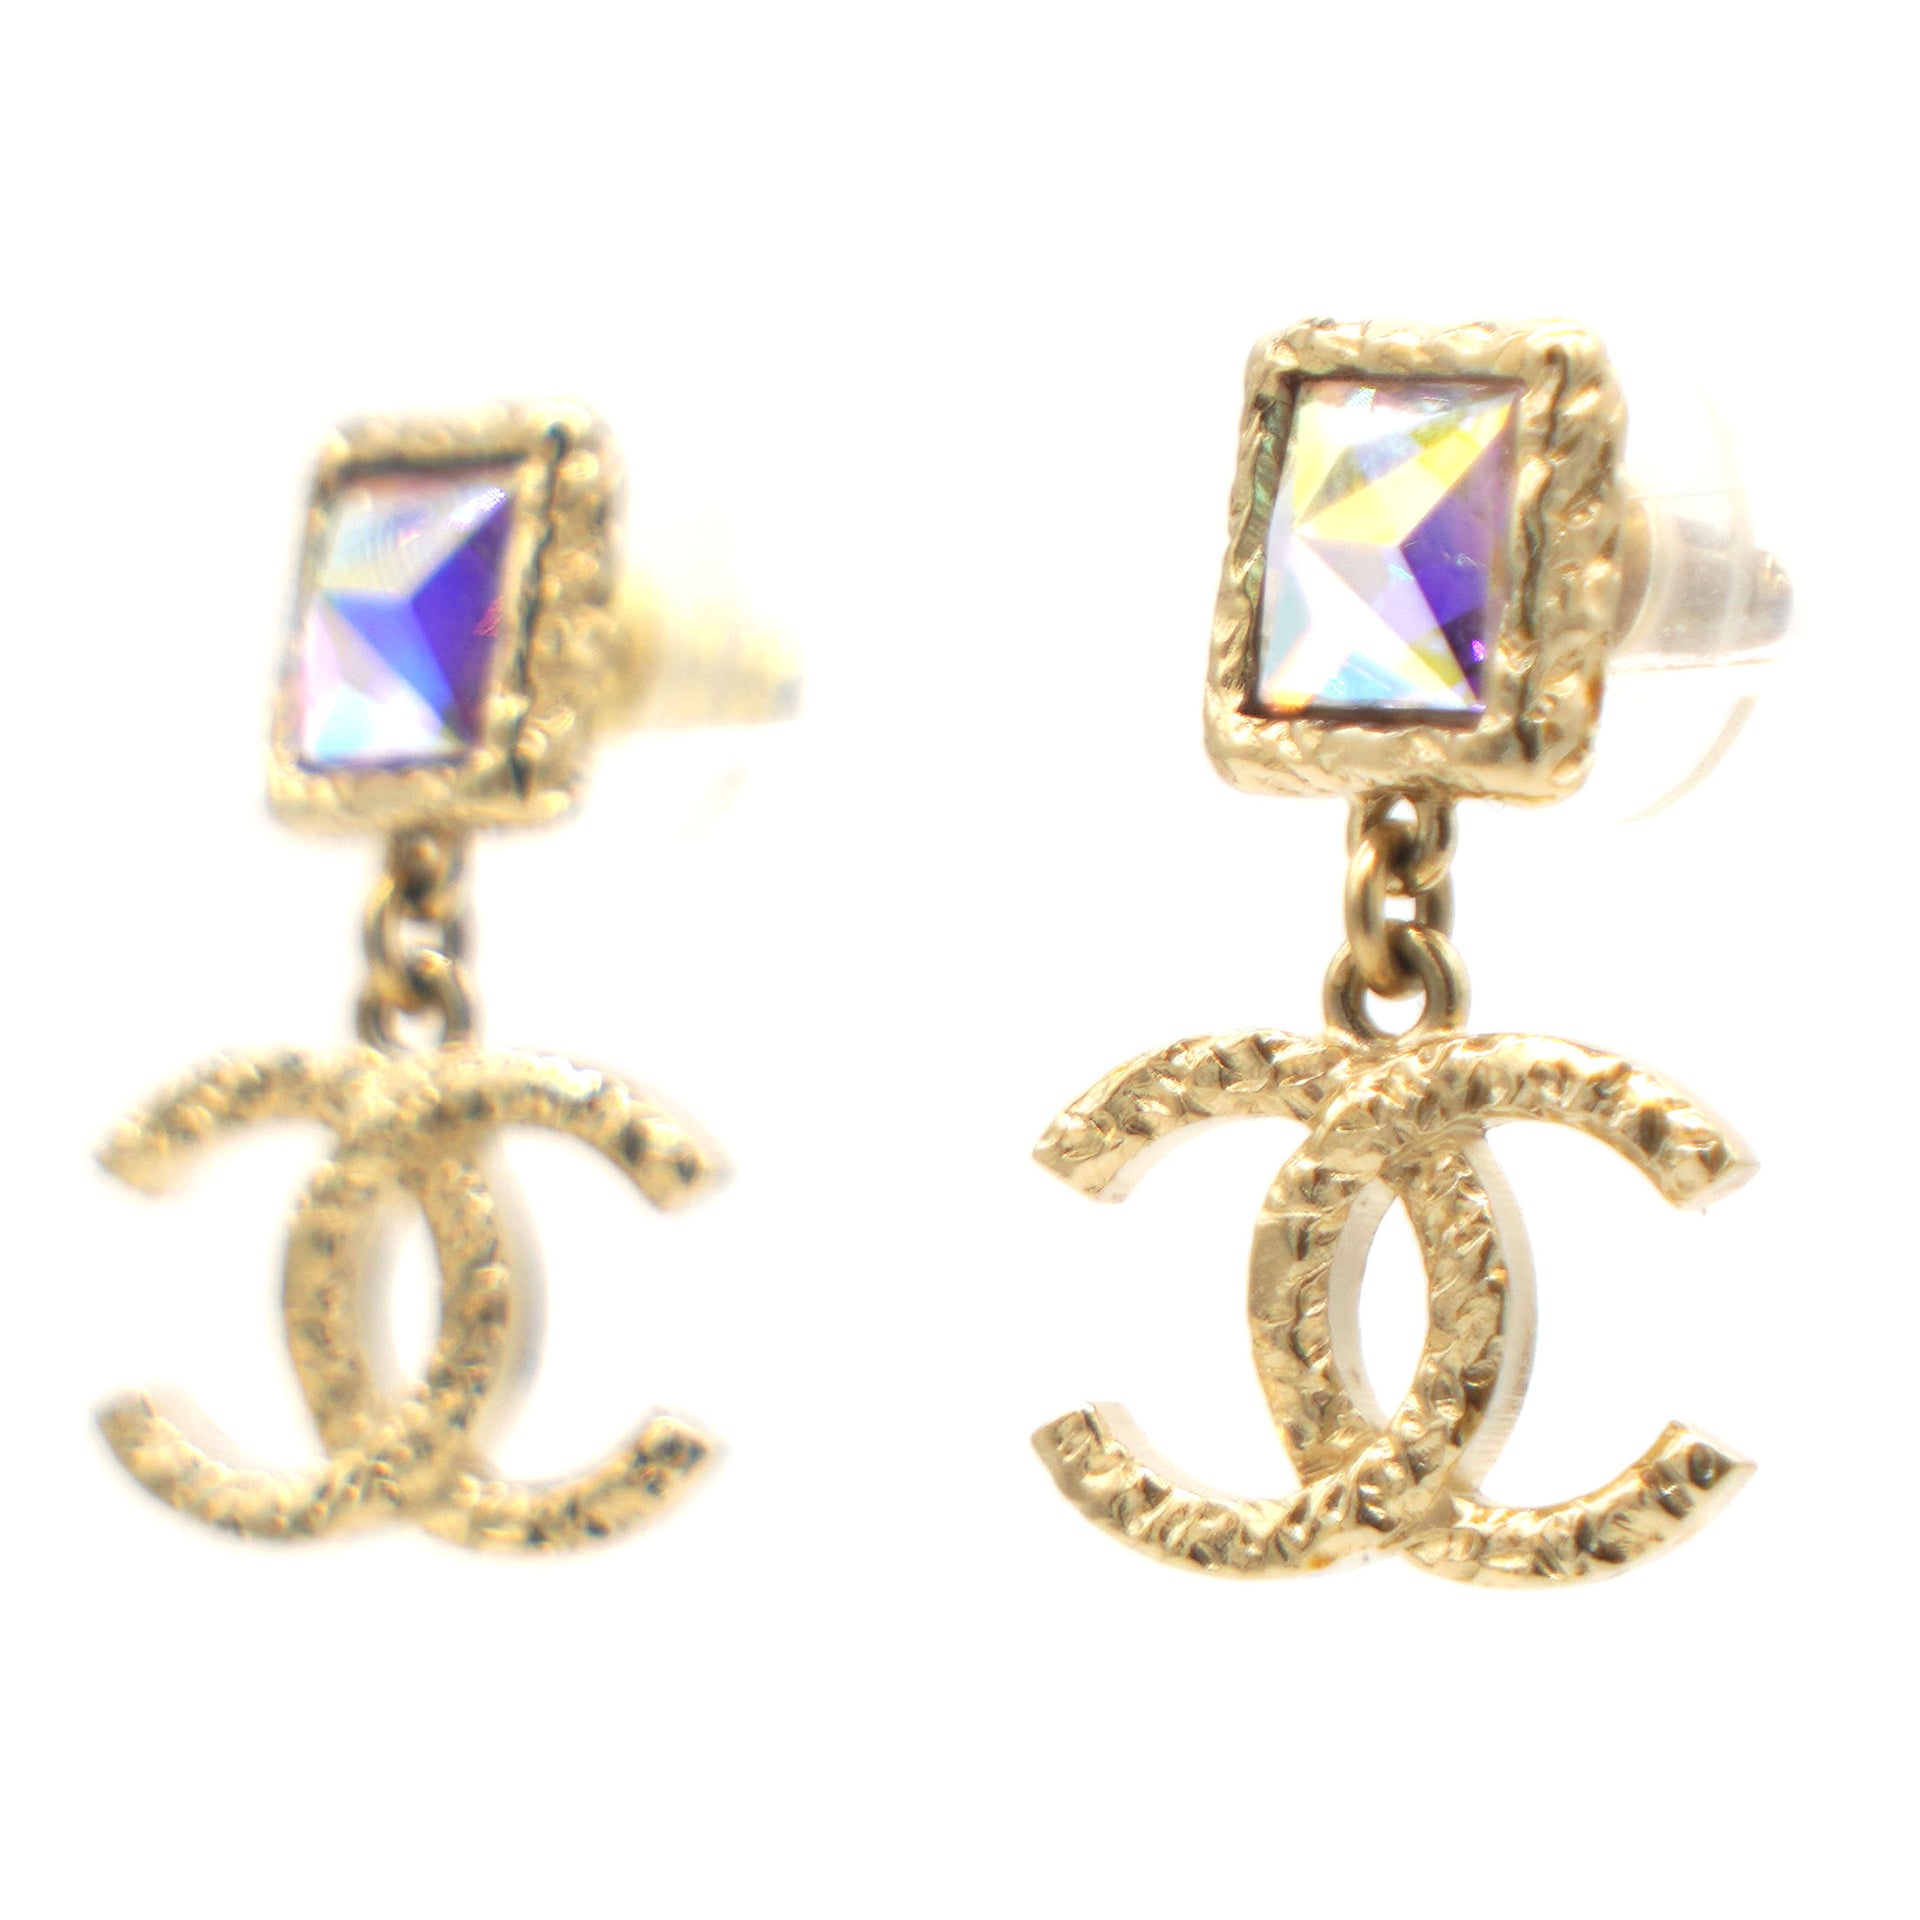 Iridescent Baguette Crystal CC Drop Earrings Gold